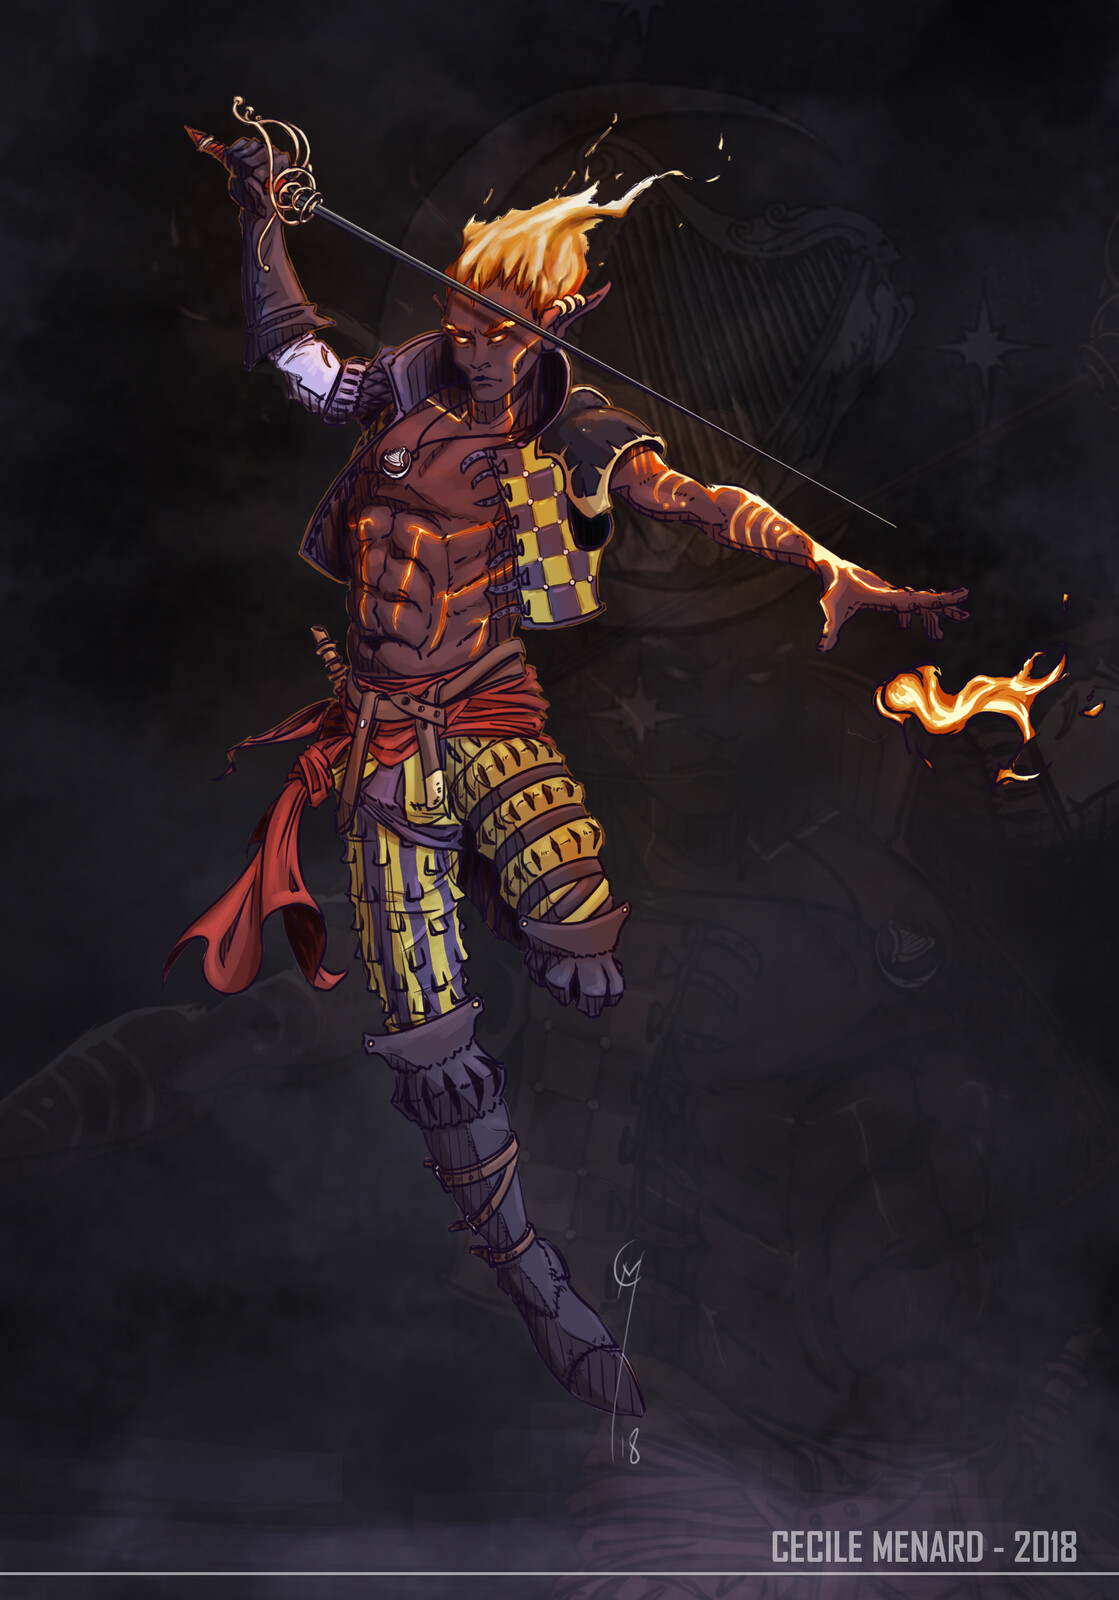 Aodh - The blade dancer bard